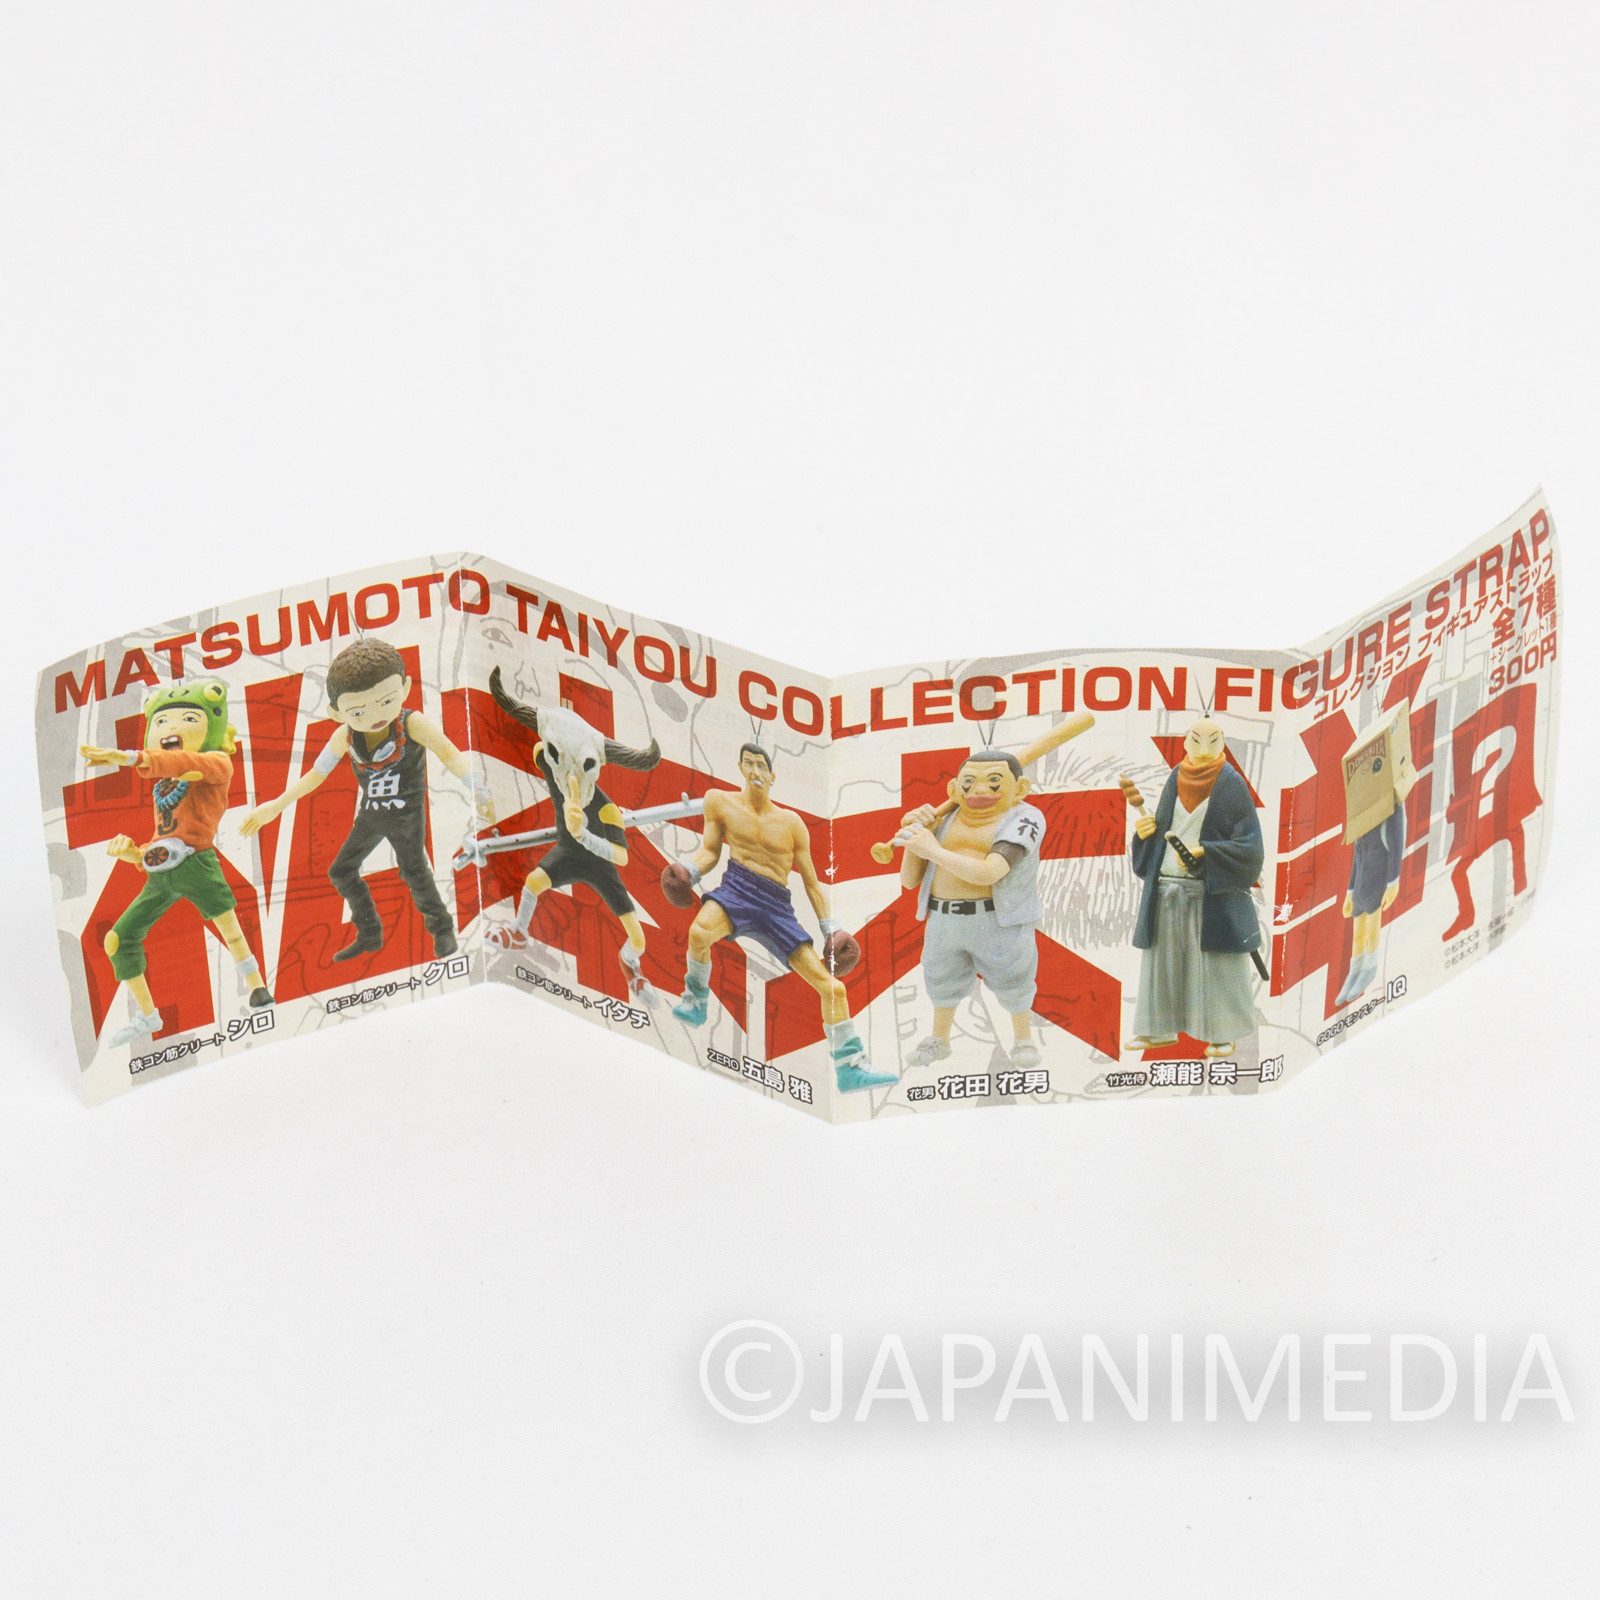 Go Go Monster Secret Matsumoto Taiyo Collection Figure Strap JAPAN